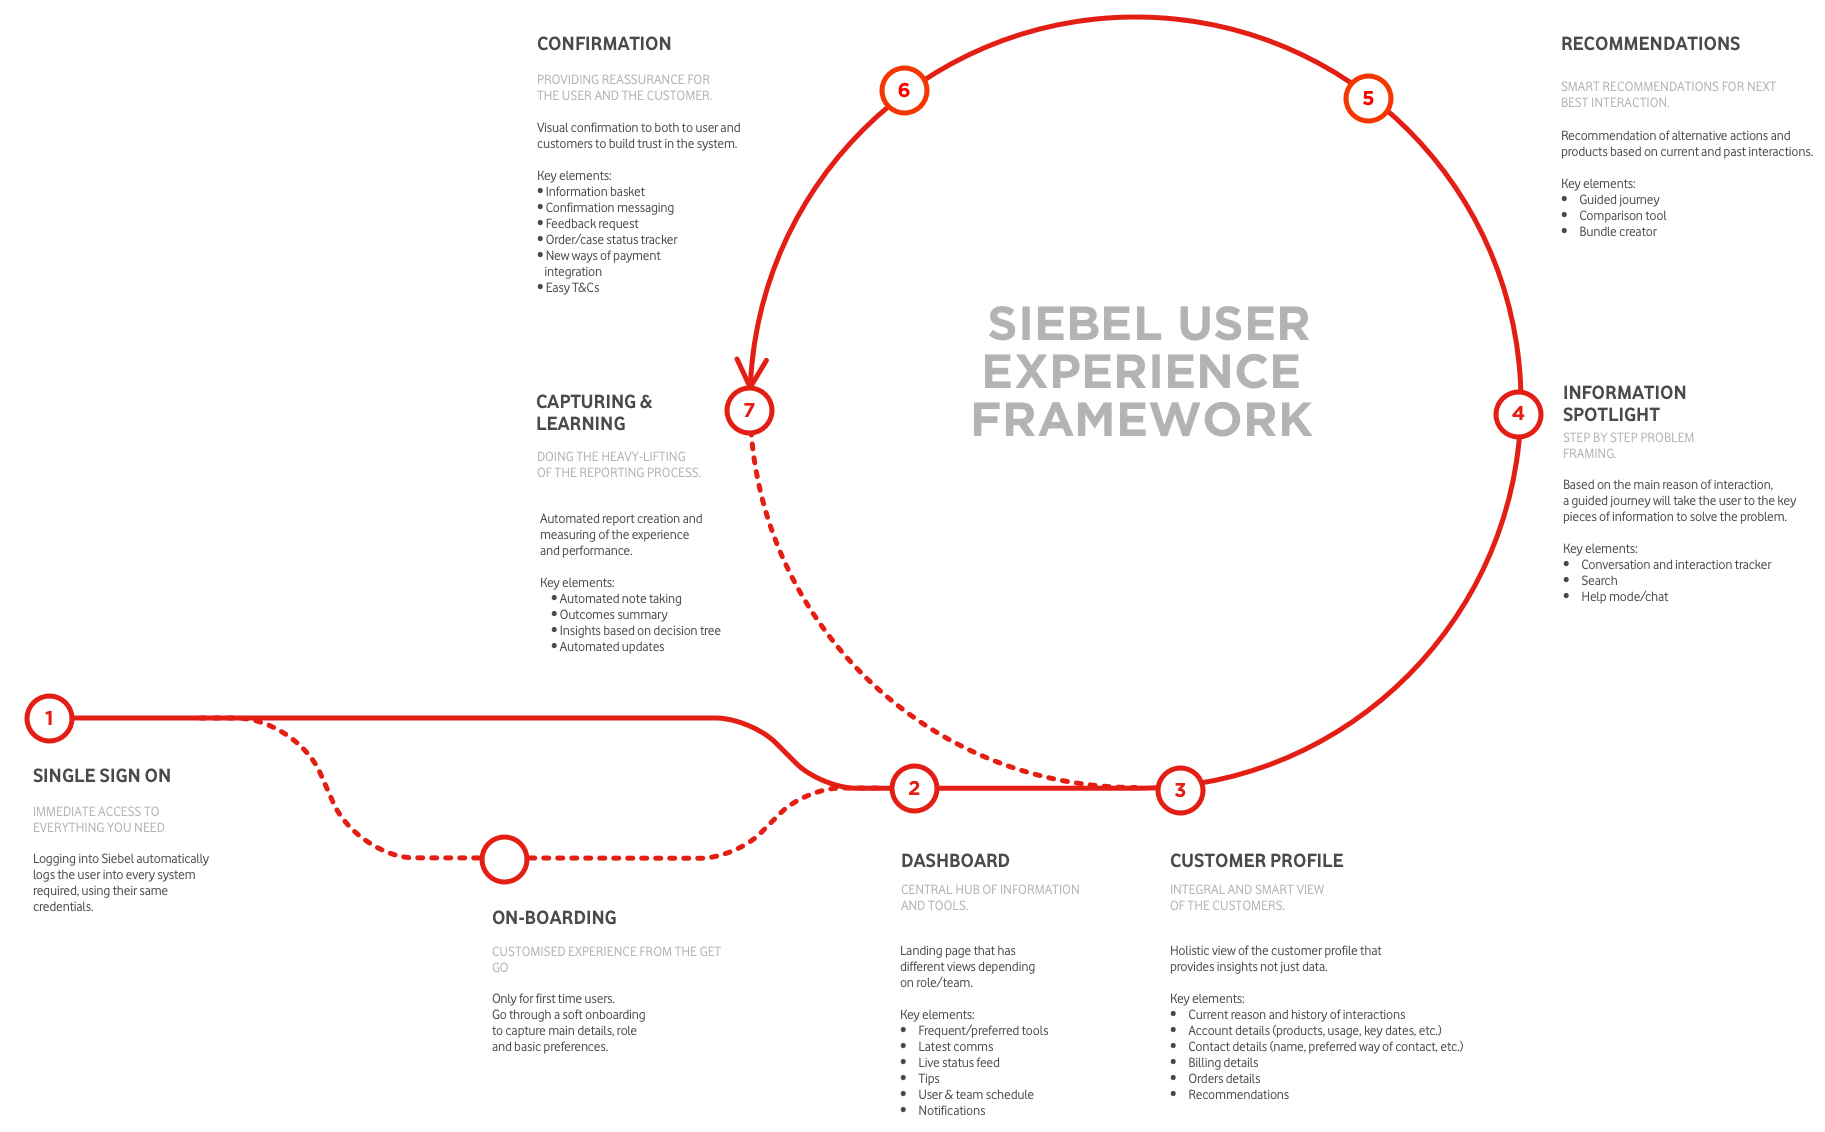 Experience framework